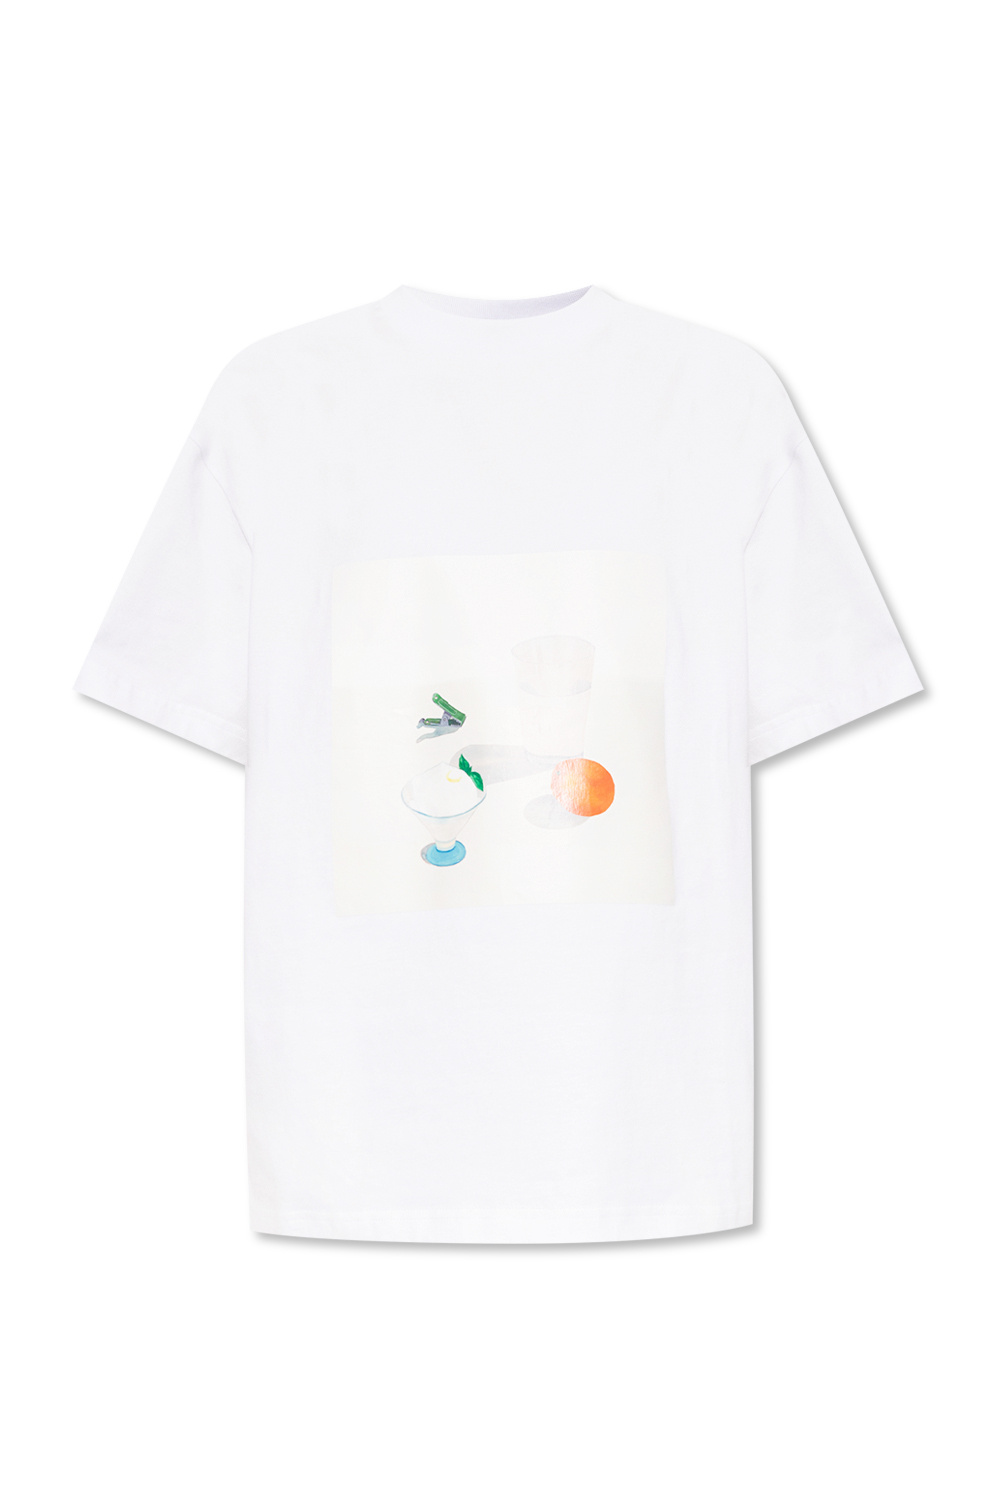 Jacquemus Printed T-shirt